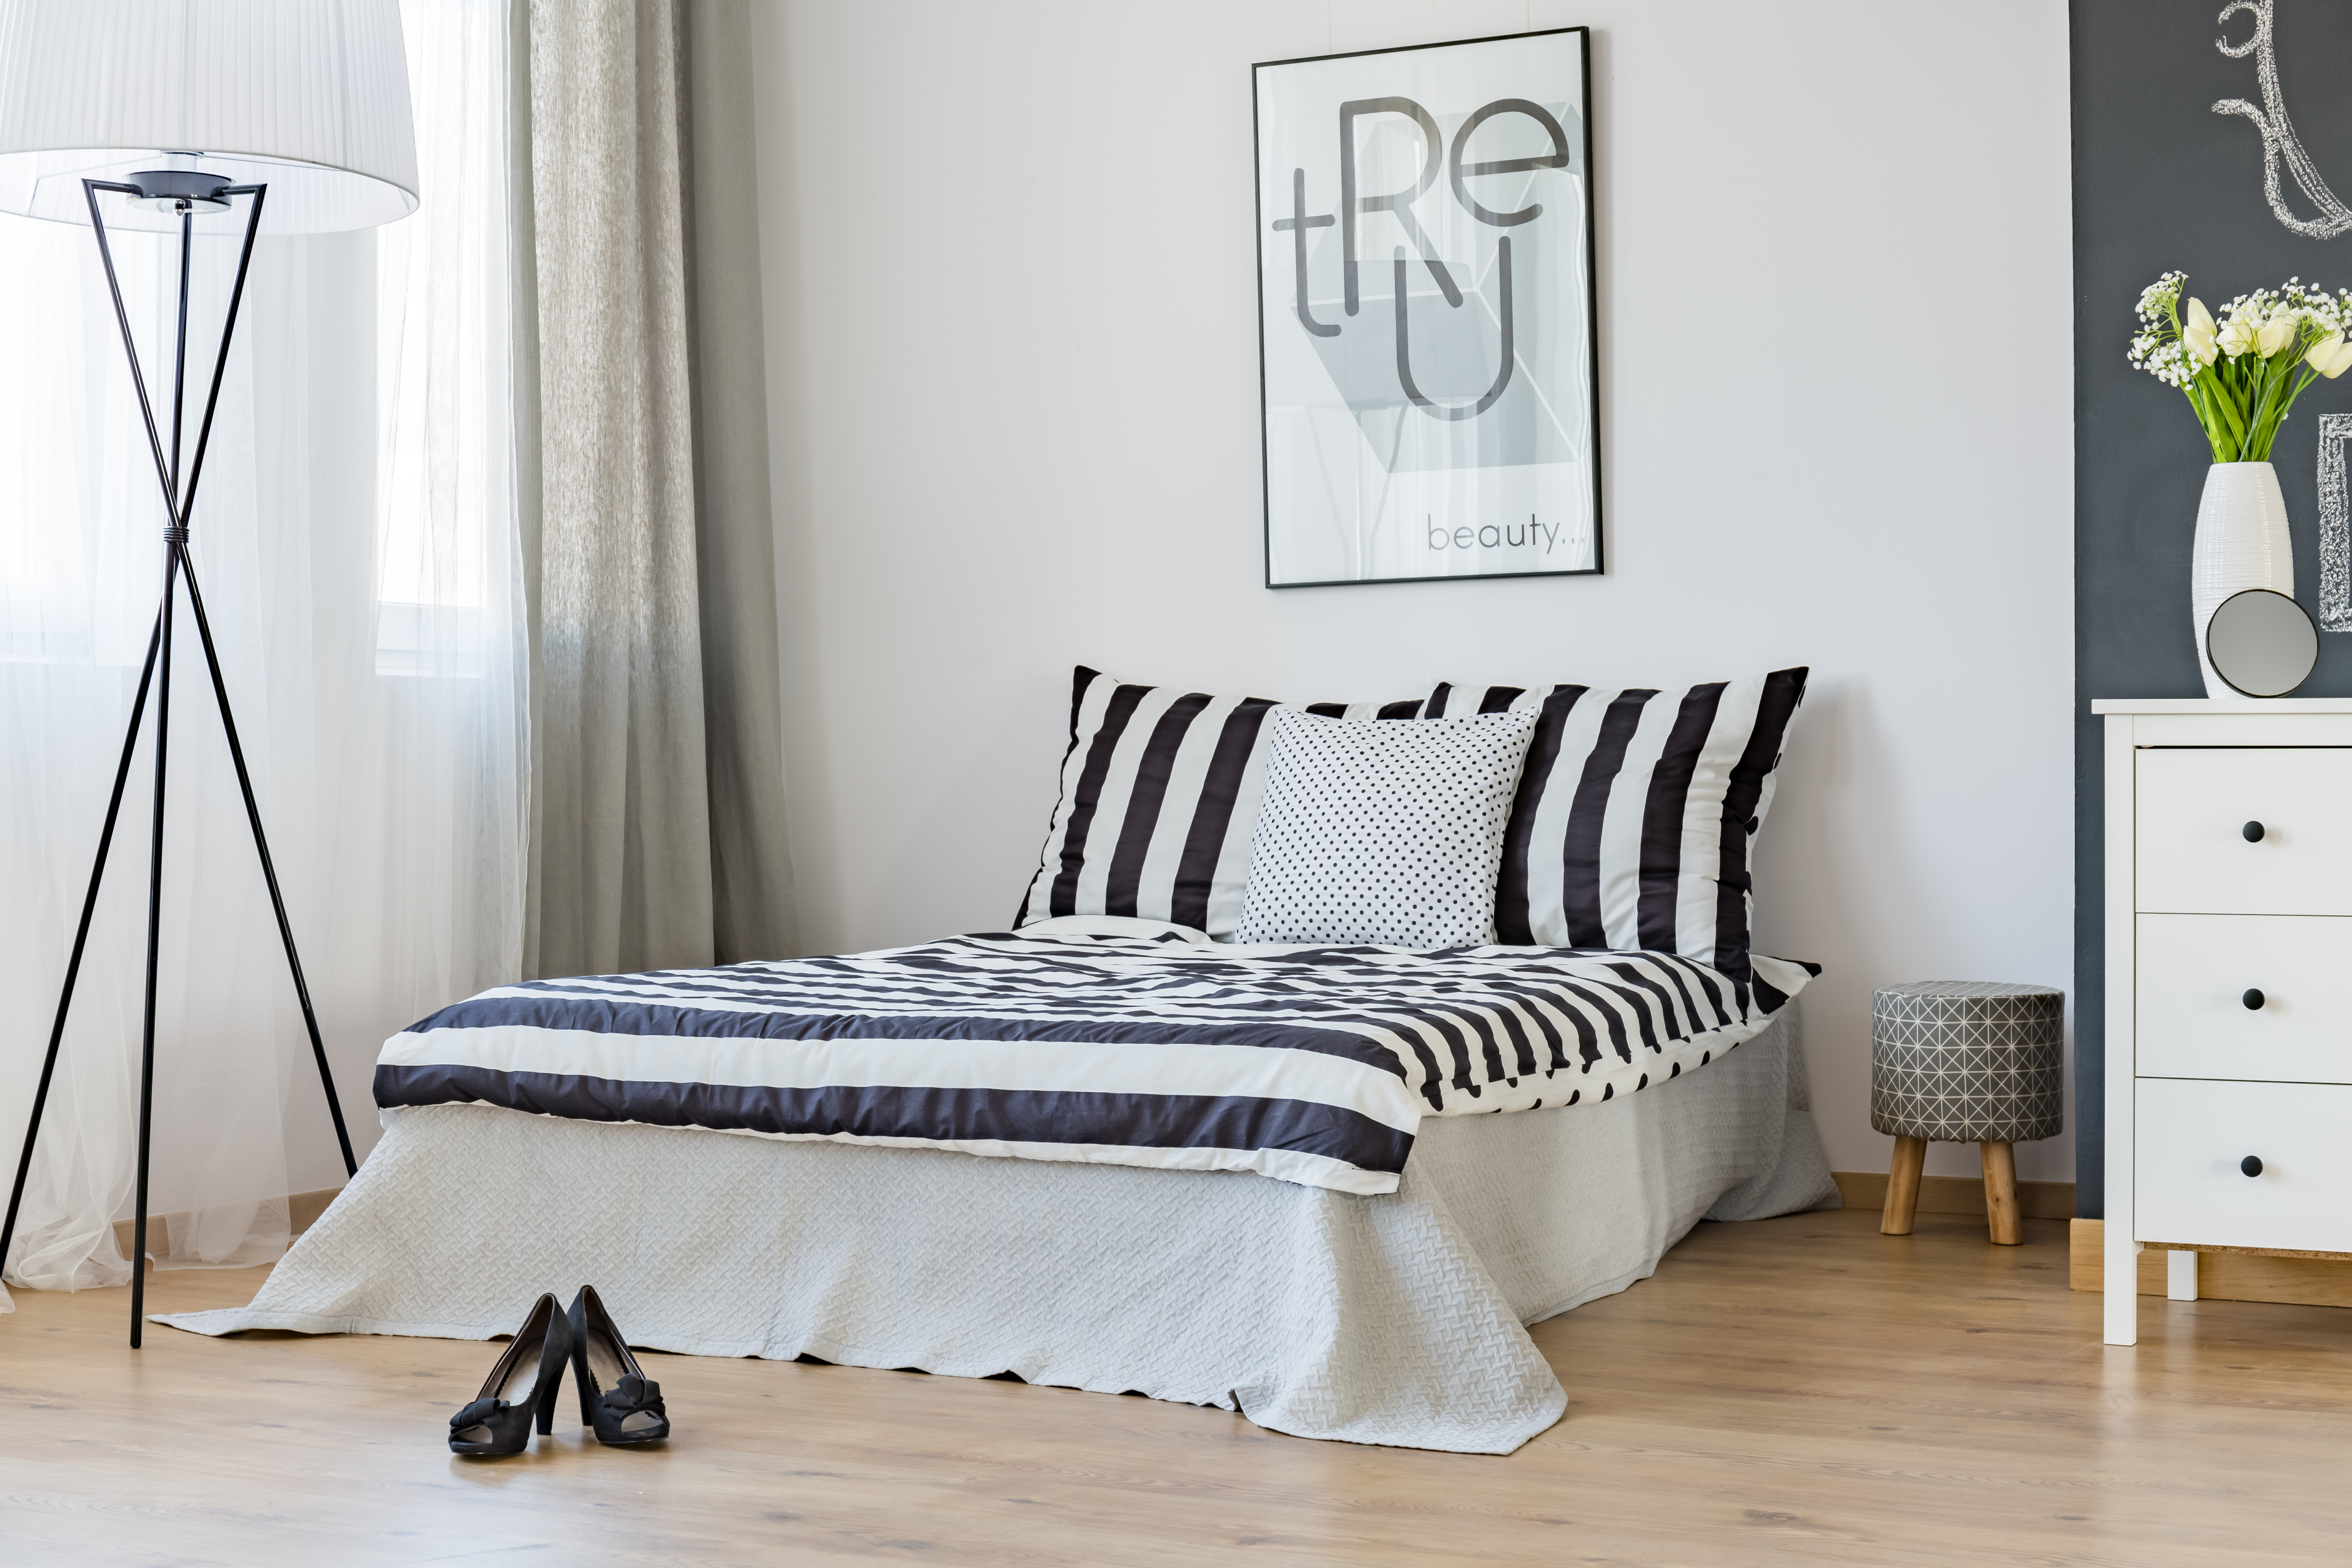 Black and white theme bedroom design for girls